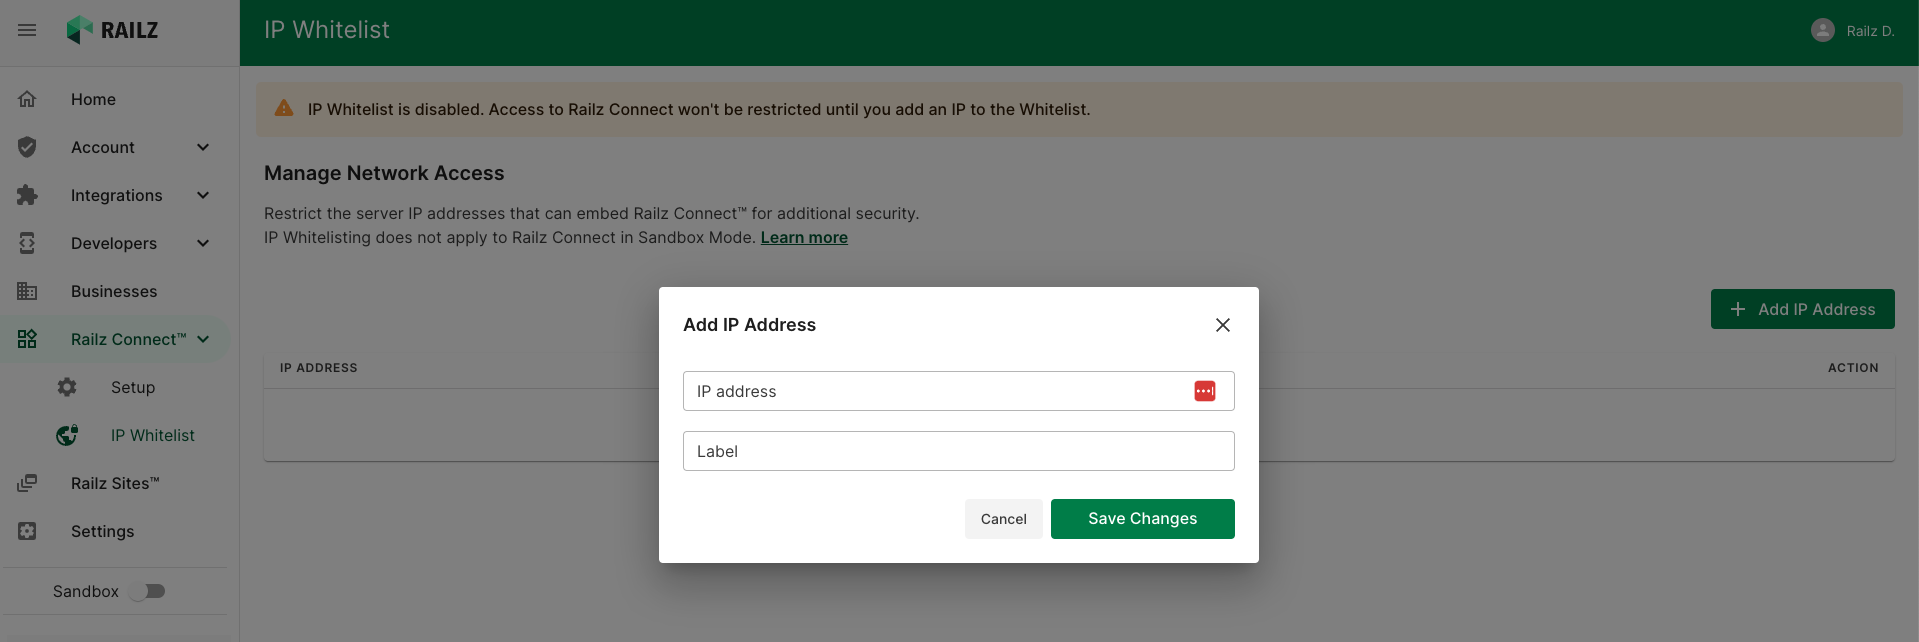 Add IP Address to IP whitelist in Railz Dashboard. Click to Expand.